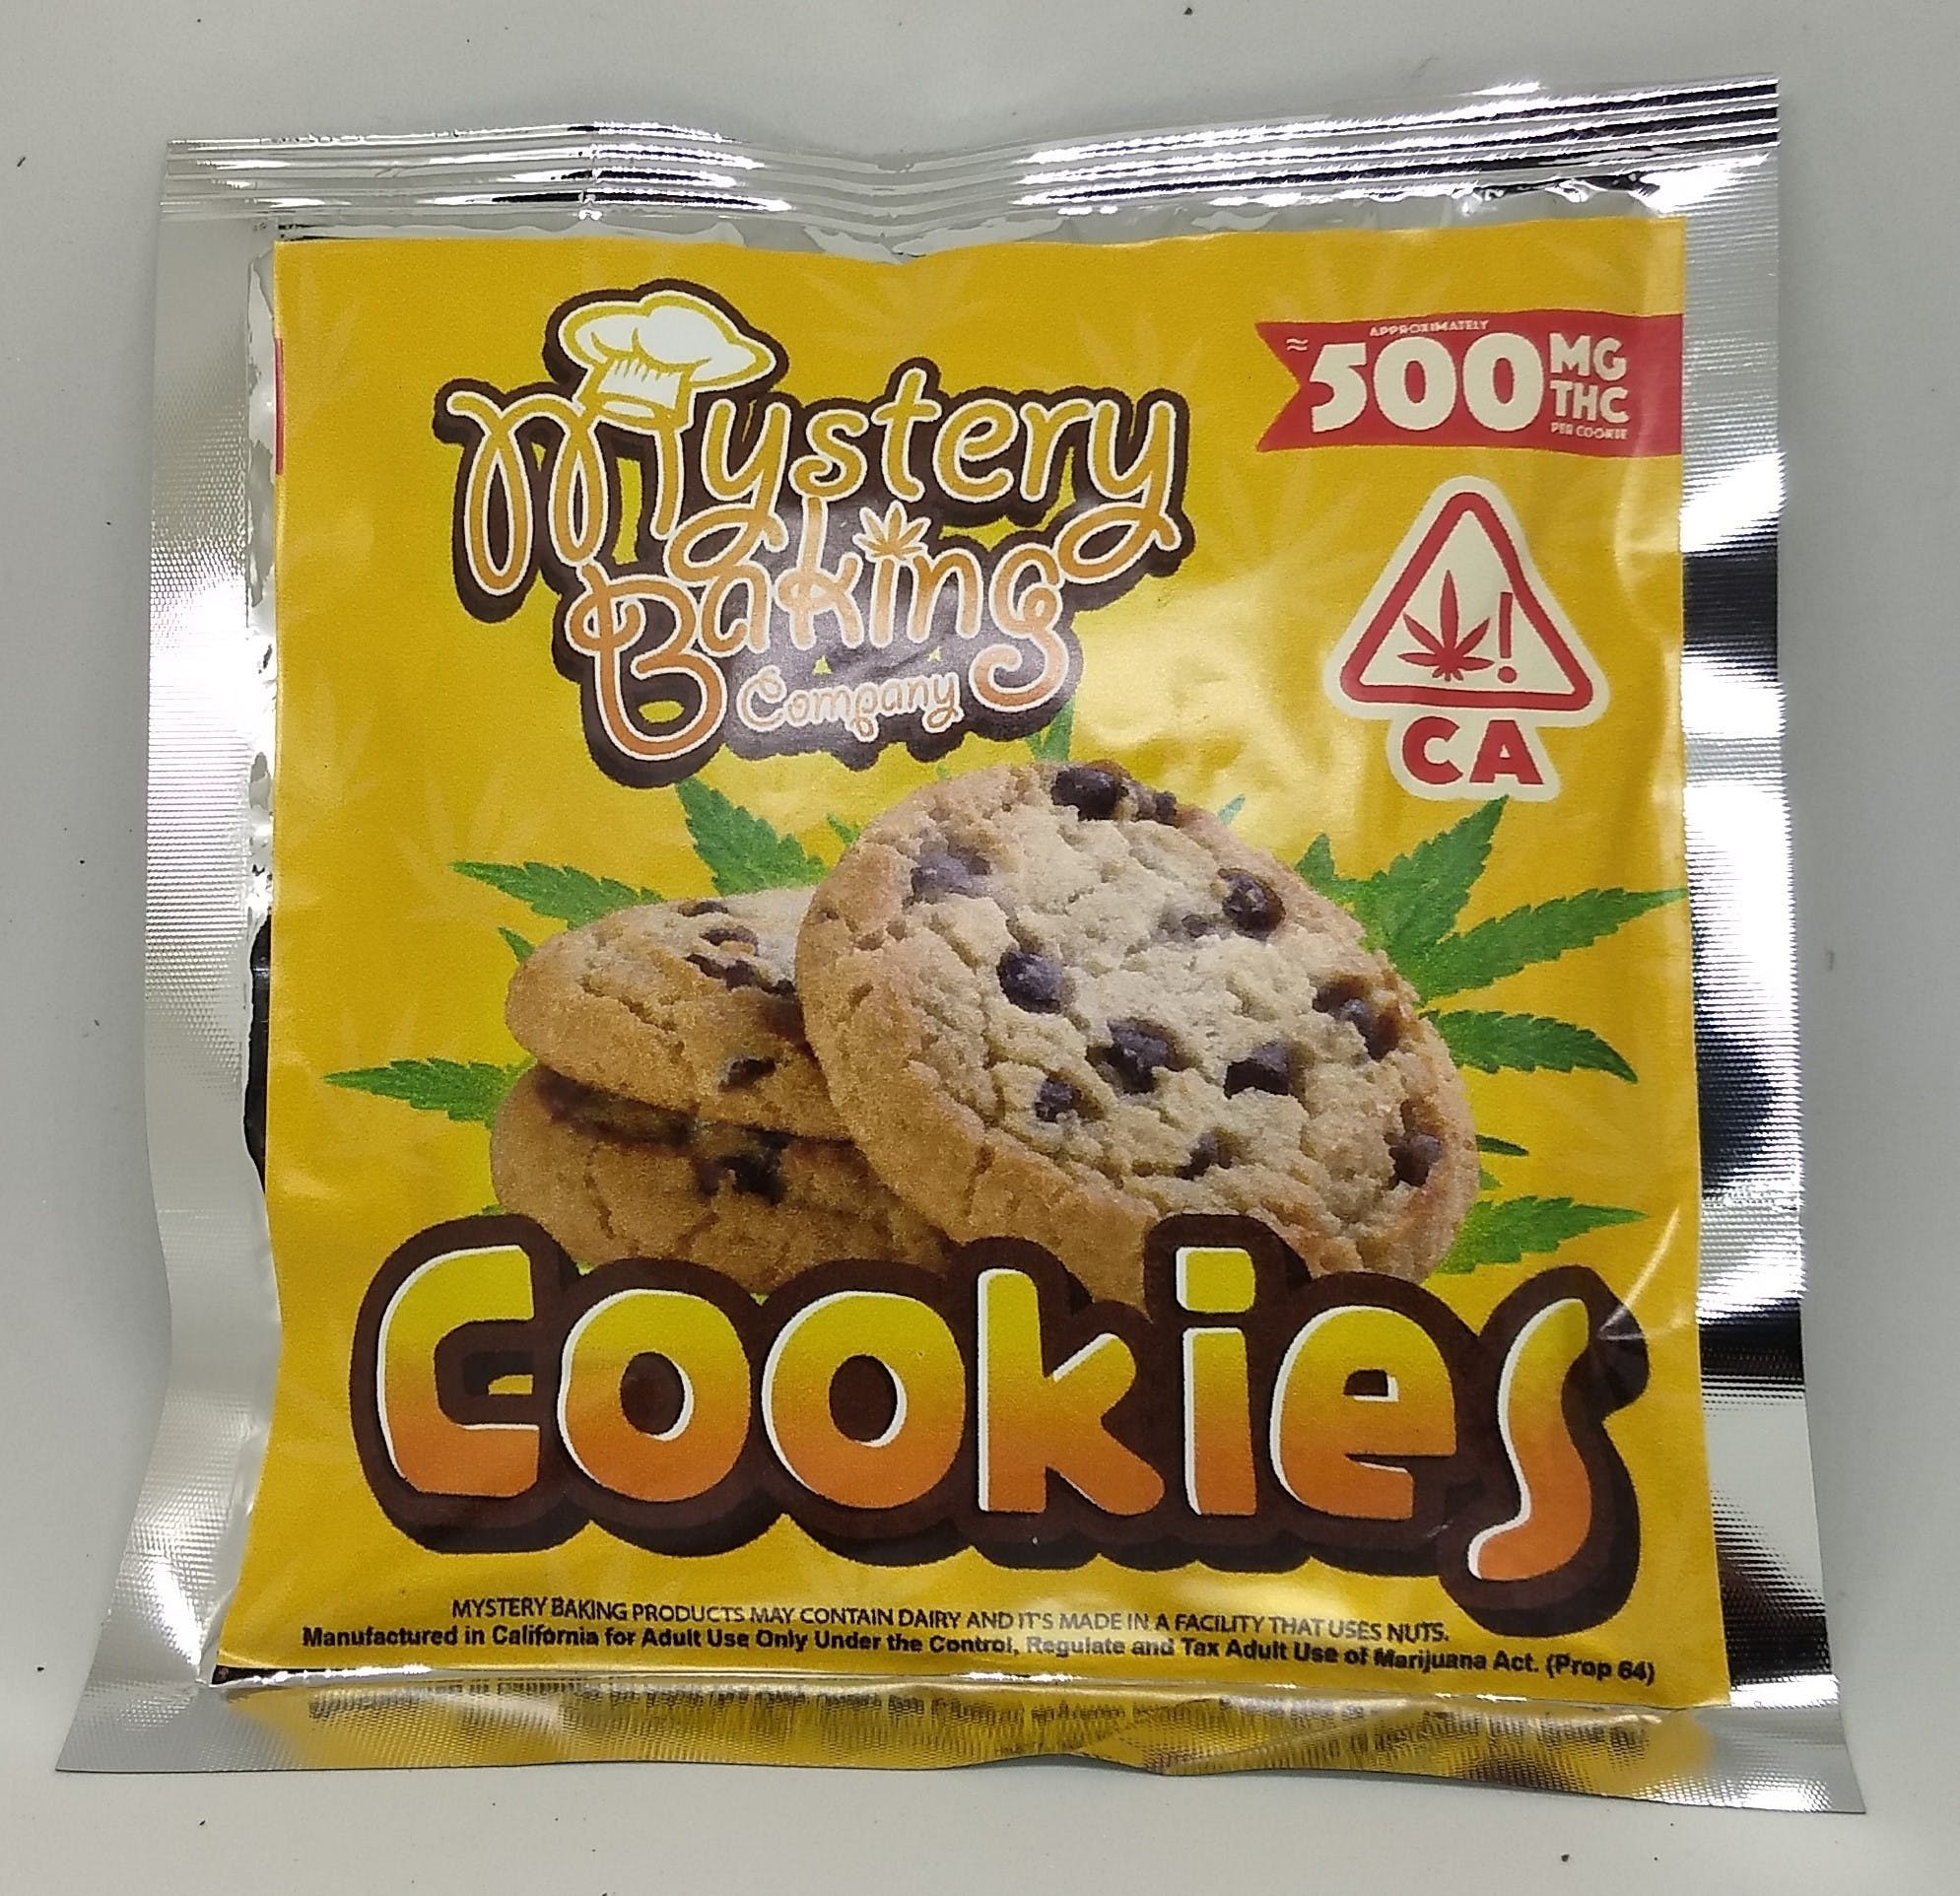 marijuana-dispensaries-10125-sepulveda-boulevard-mission-hills-mystery-baking-100mg-cookies